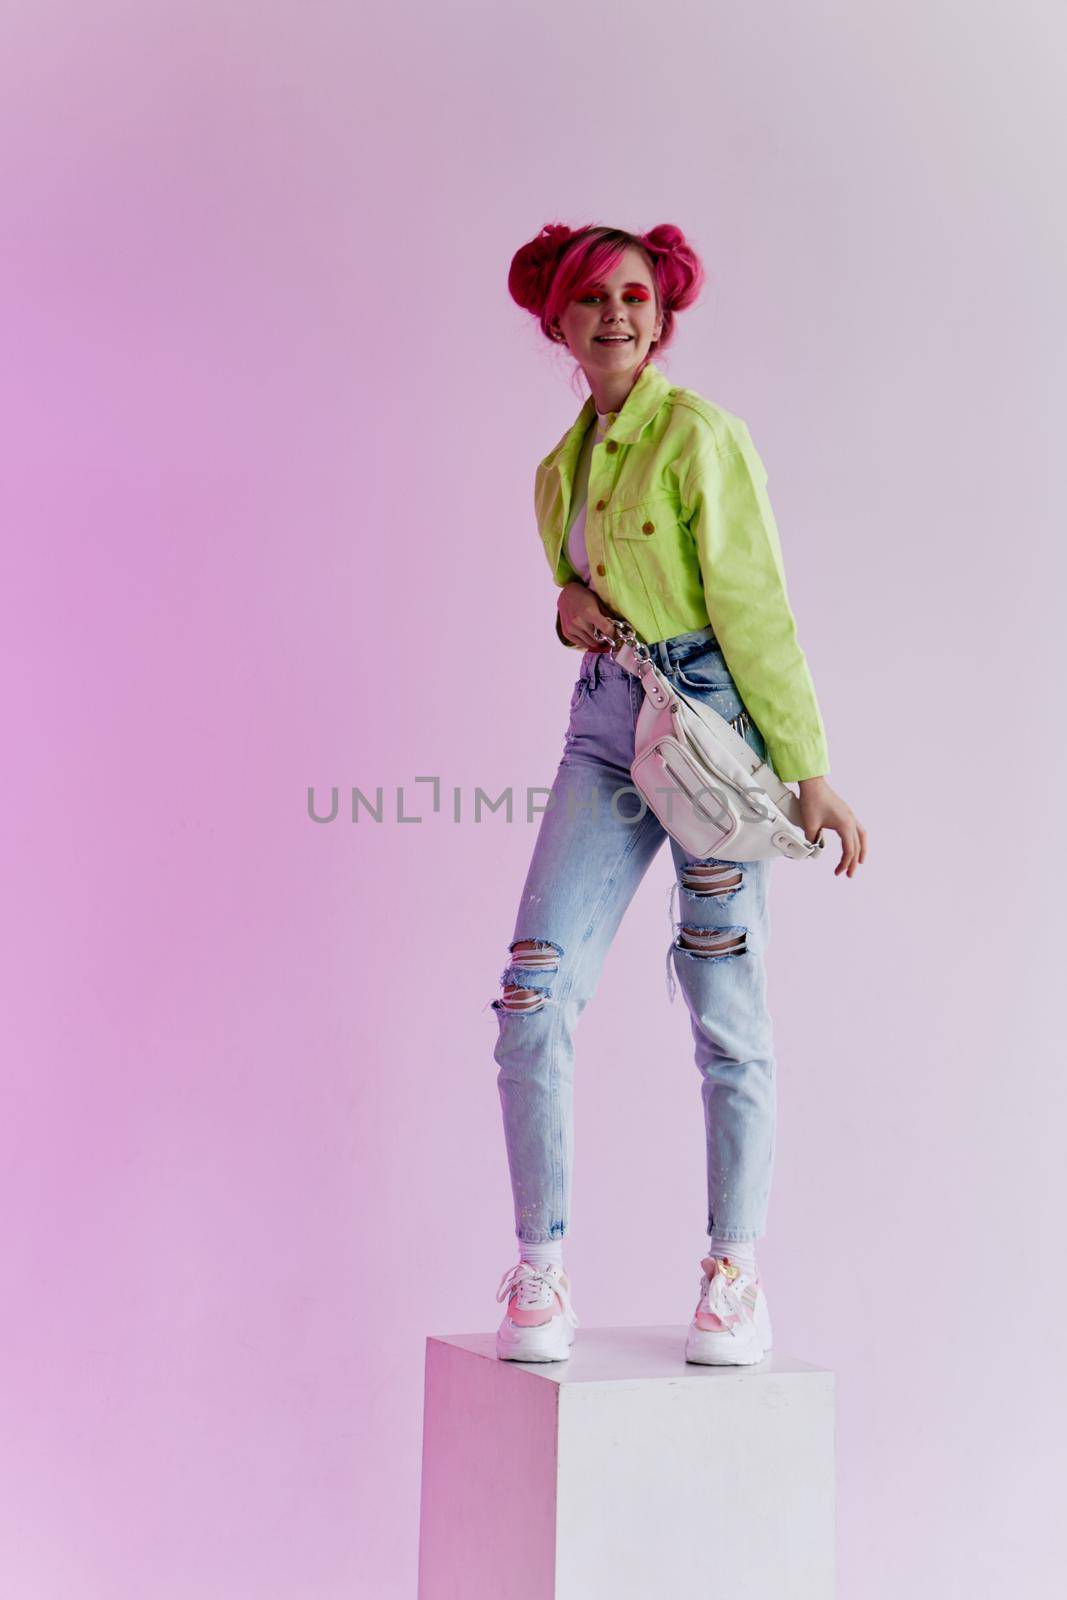 cheerful woman bright makeup posing poster stylish clothing by Vichizh